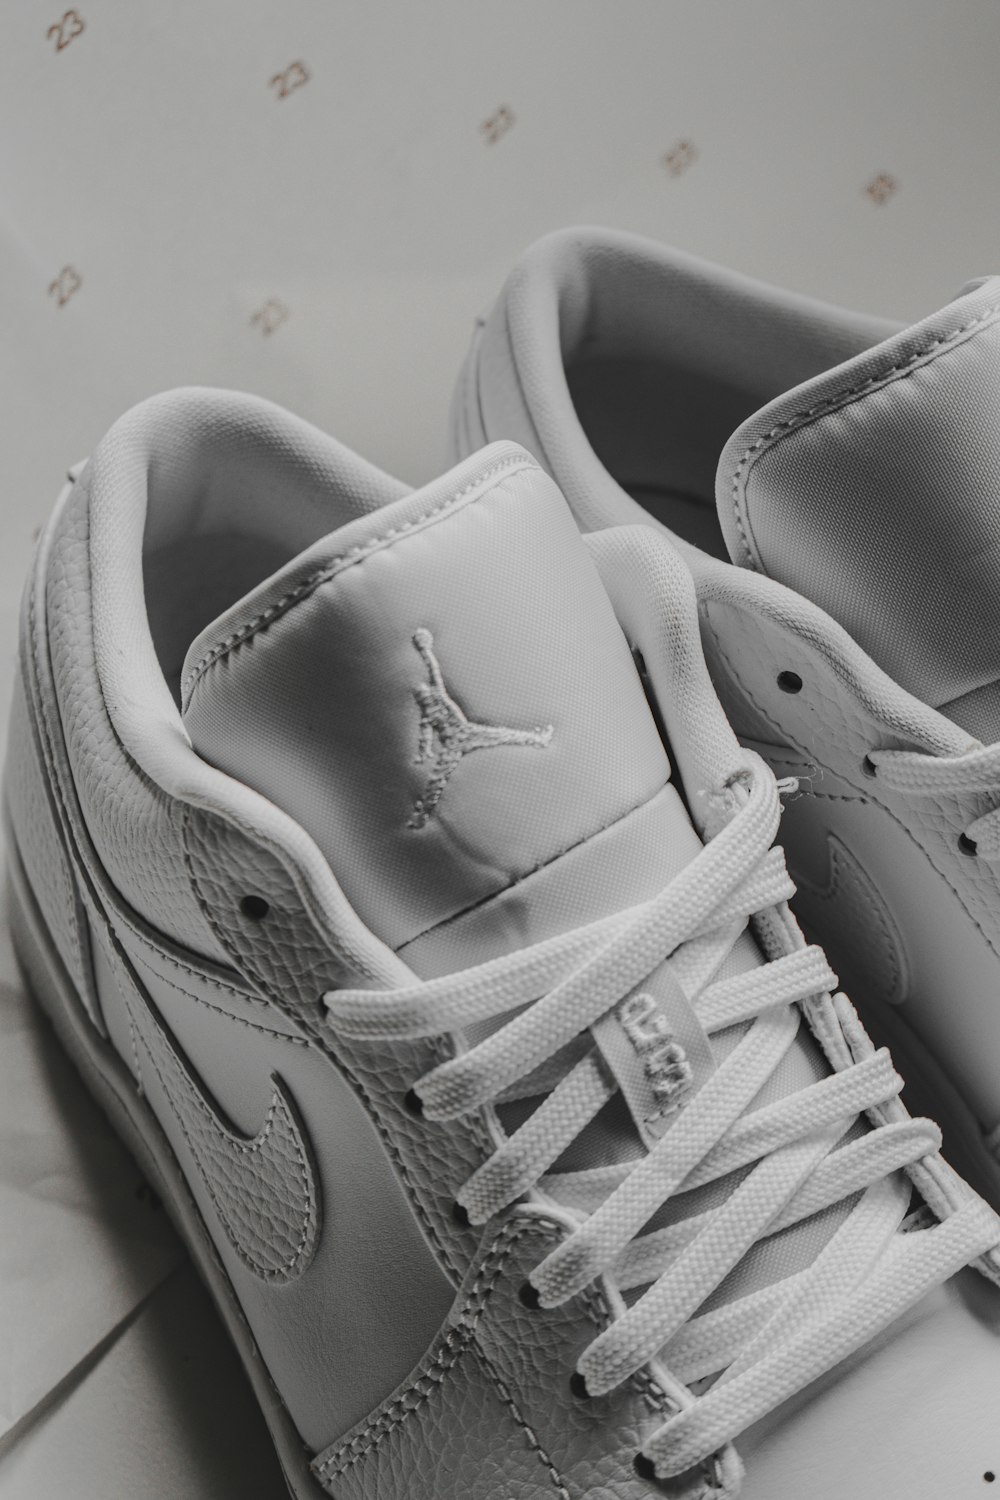 white and red nike athletic shoes photo – Free Grey Image on Unsplash